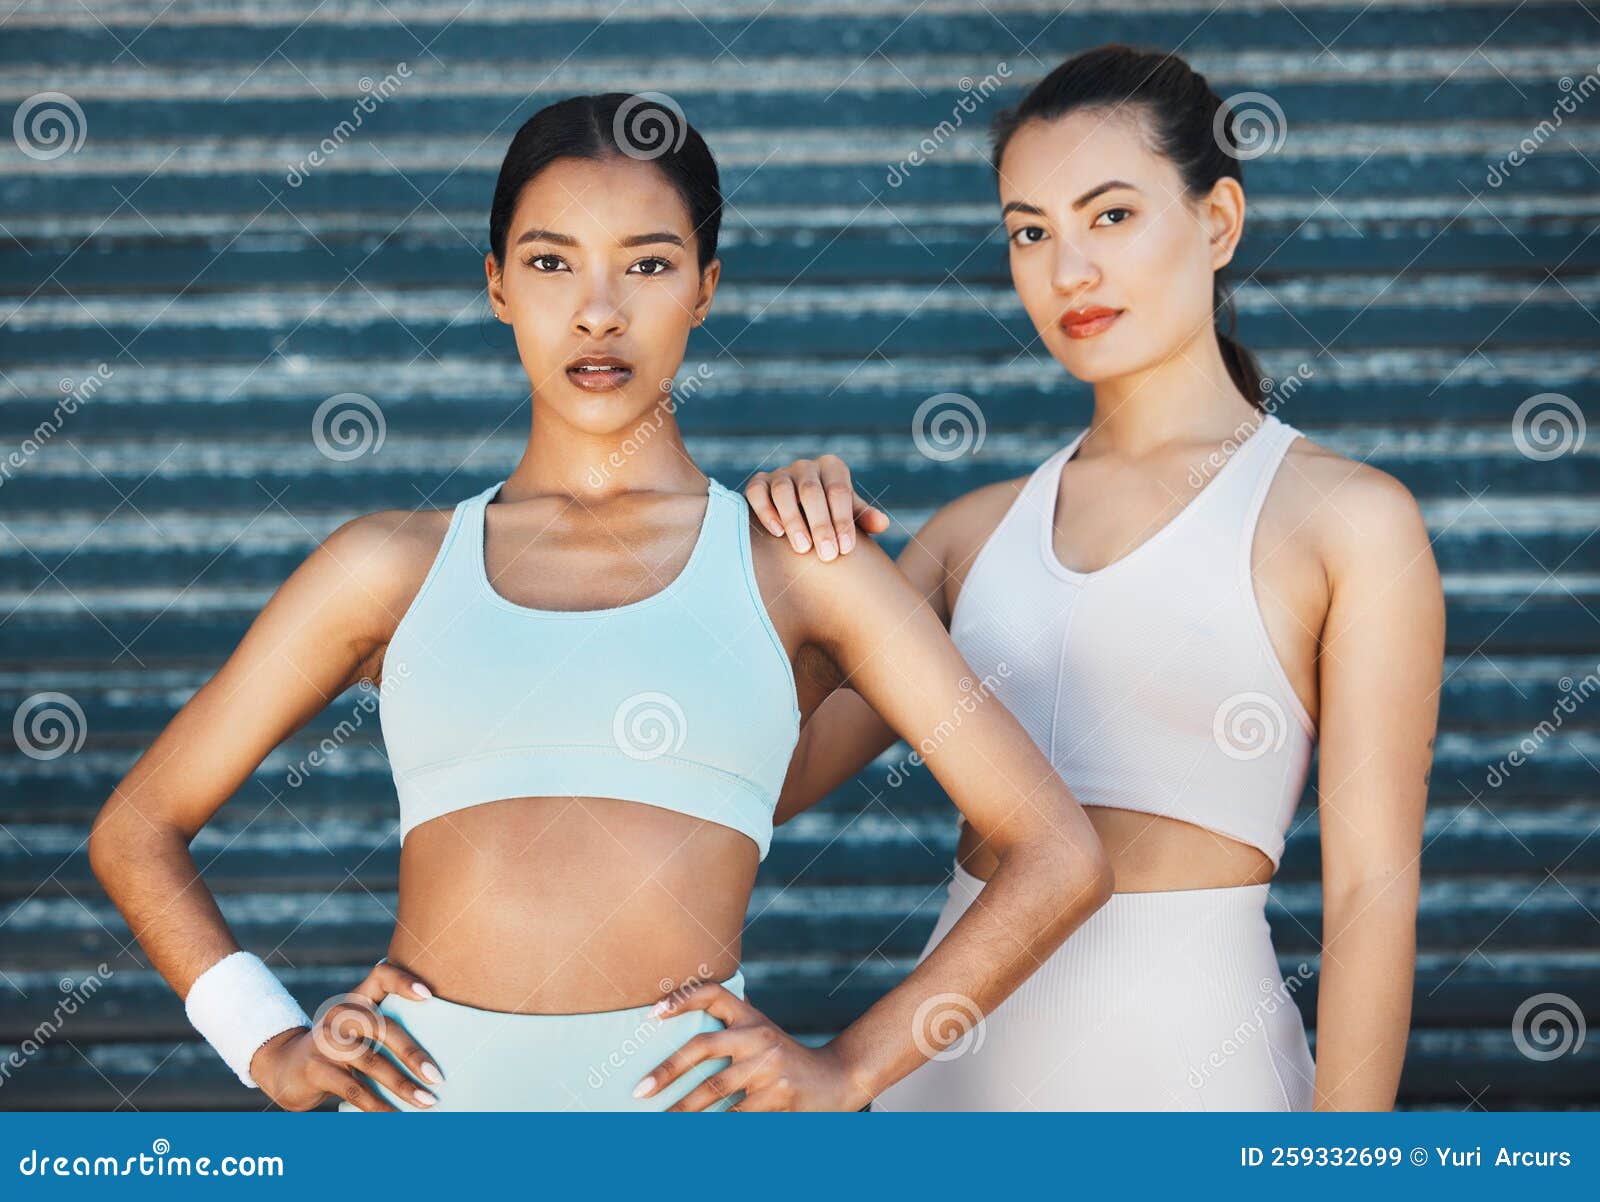 Body goals!  Fitness girls, Fitness inspiration, Muscle girls